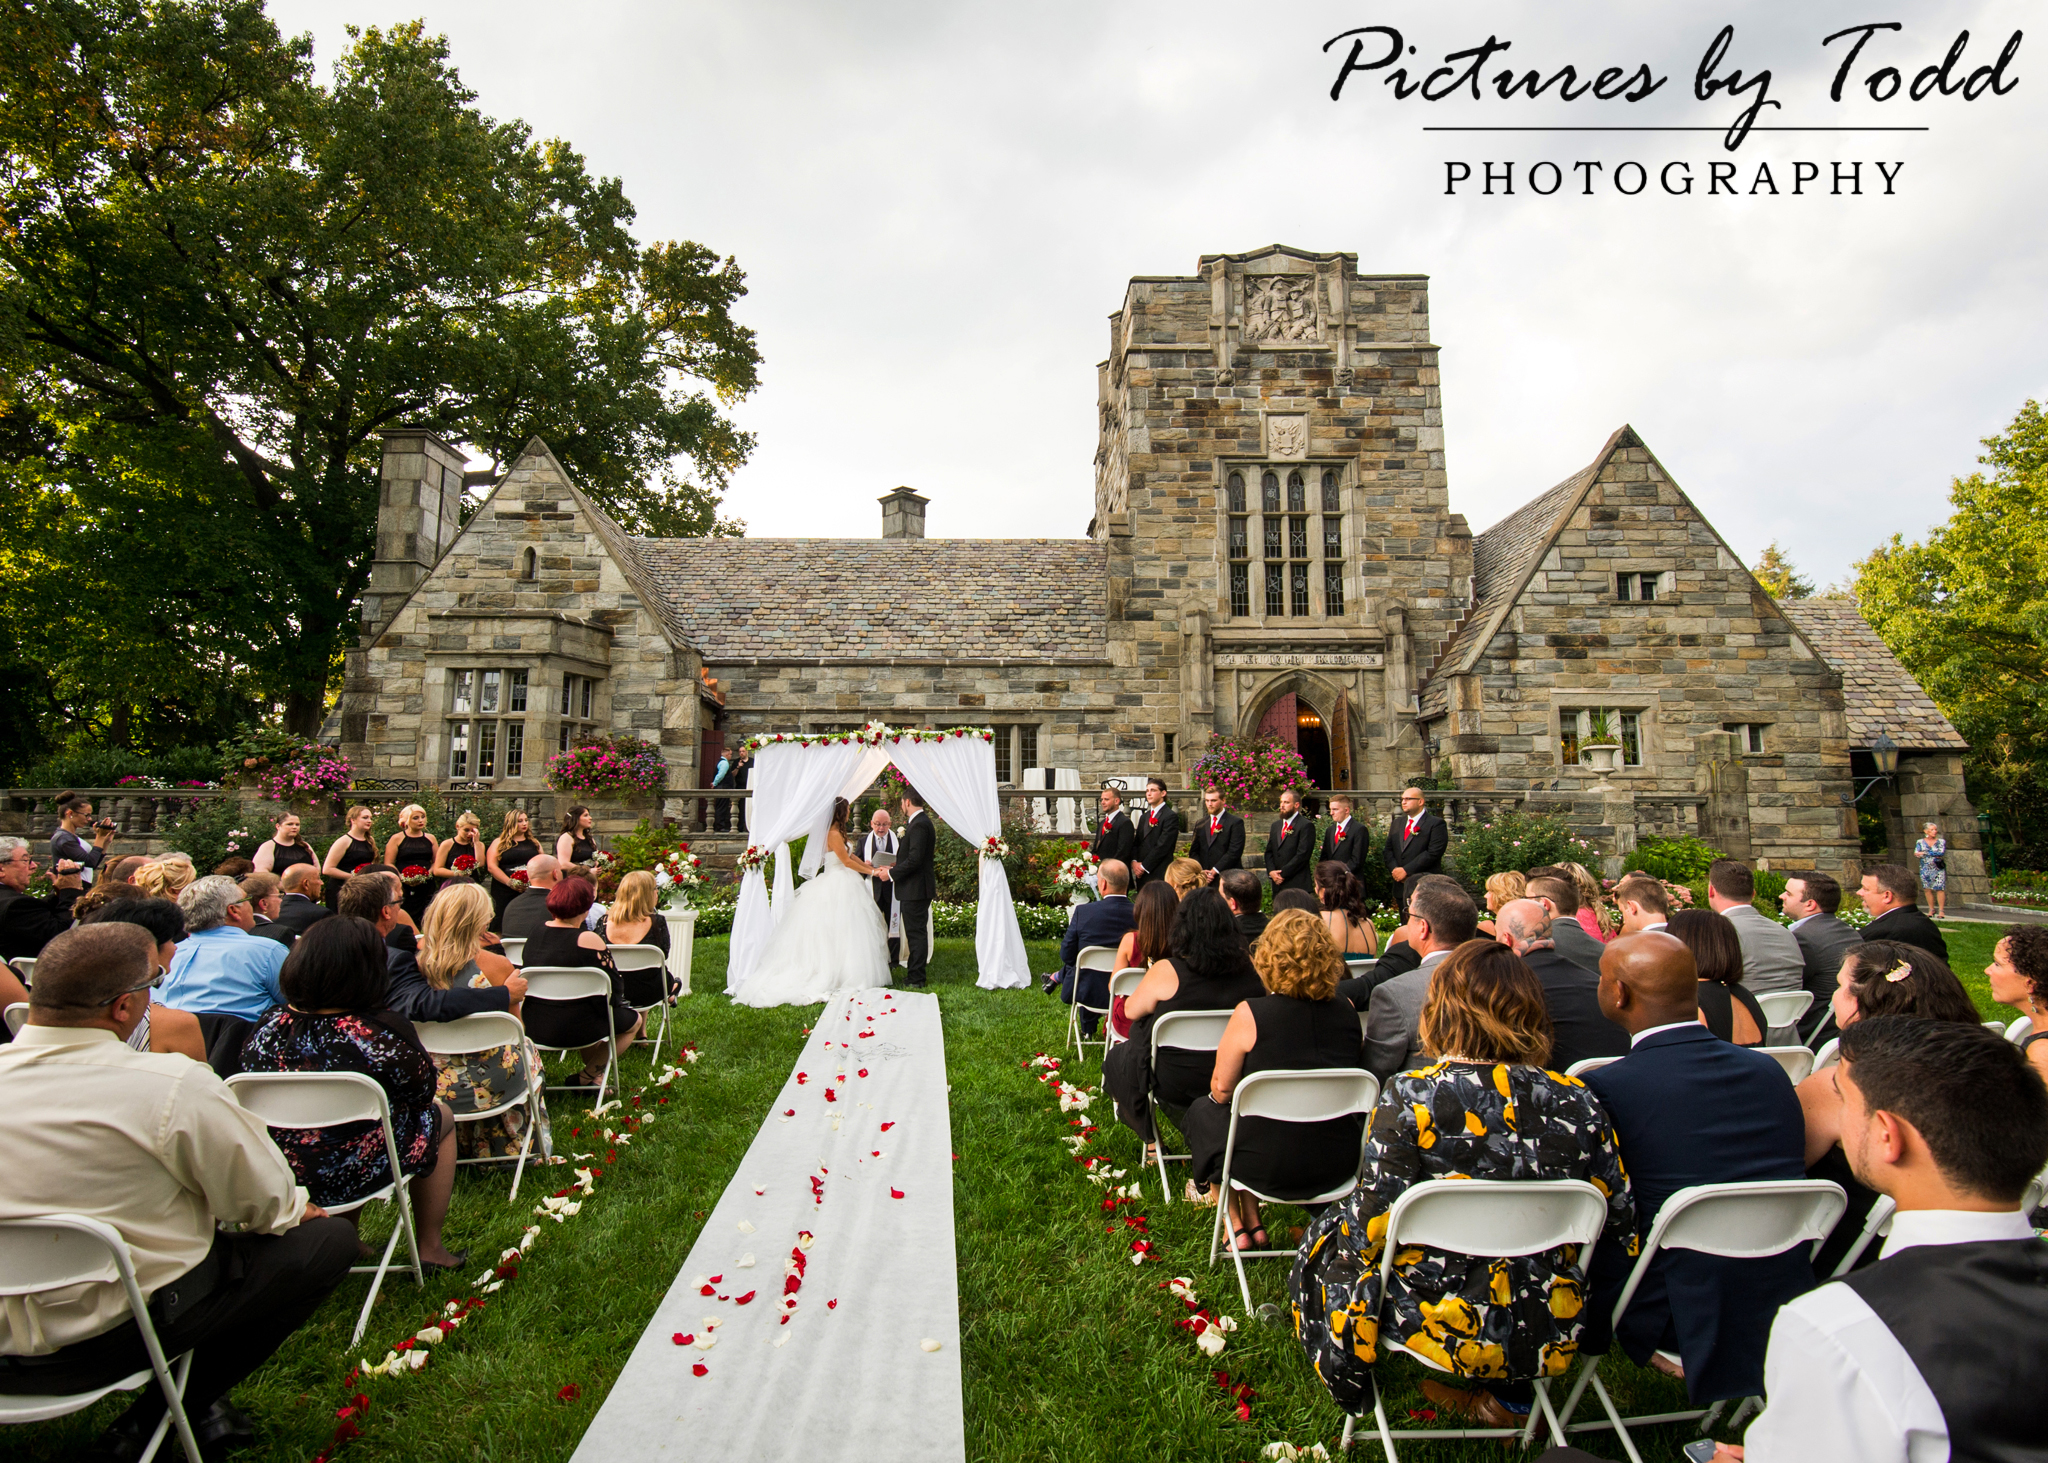 Merion Tribute House Wedding Pictures by Todd, Sunrise Florist, John Serock Catering, Sound EFX, Philadelphia, Merion Pennsylvania